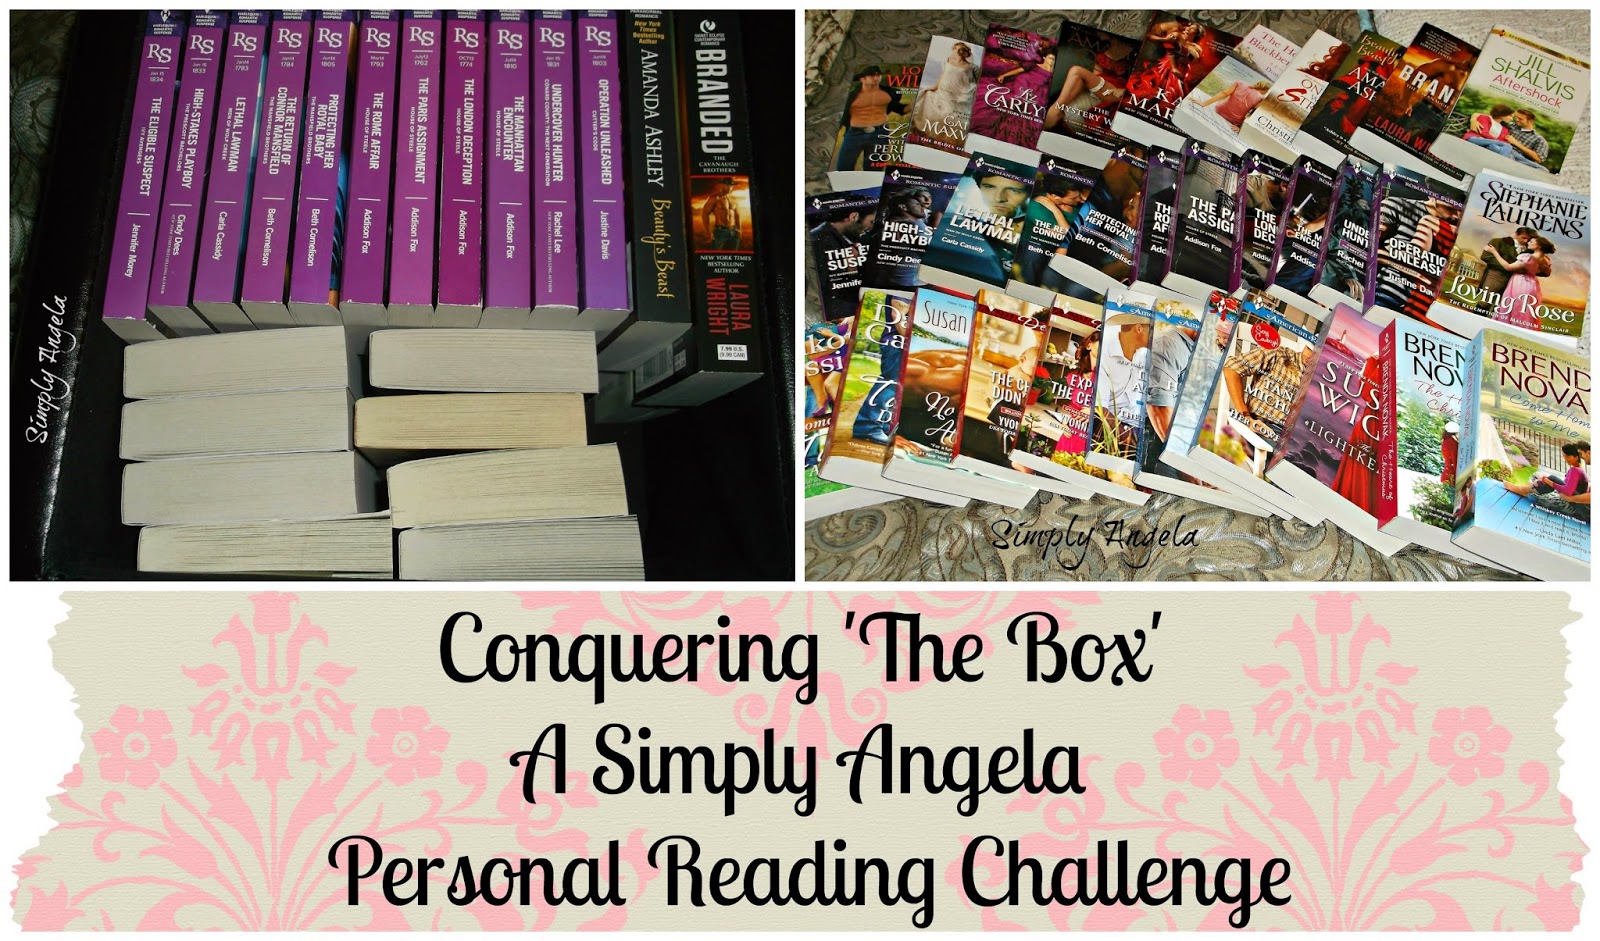 http://simplyangelarenee.blogspot.com/2015/01/personal-reading-challenge-conquering.html